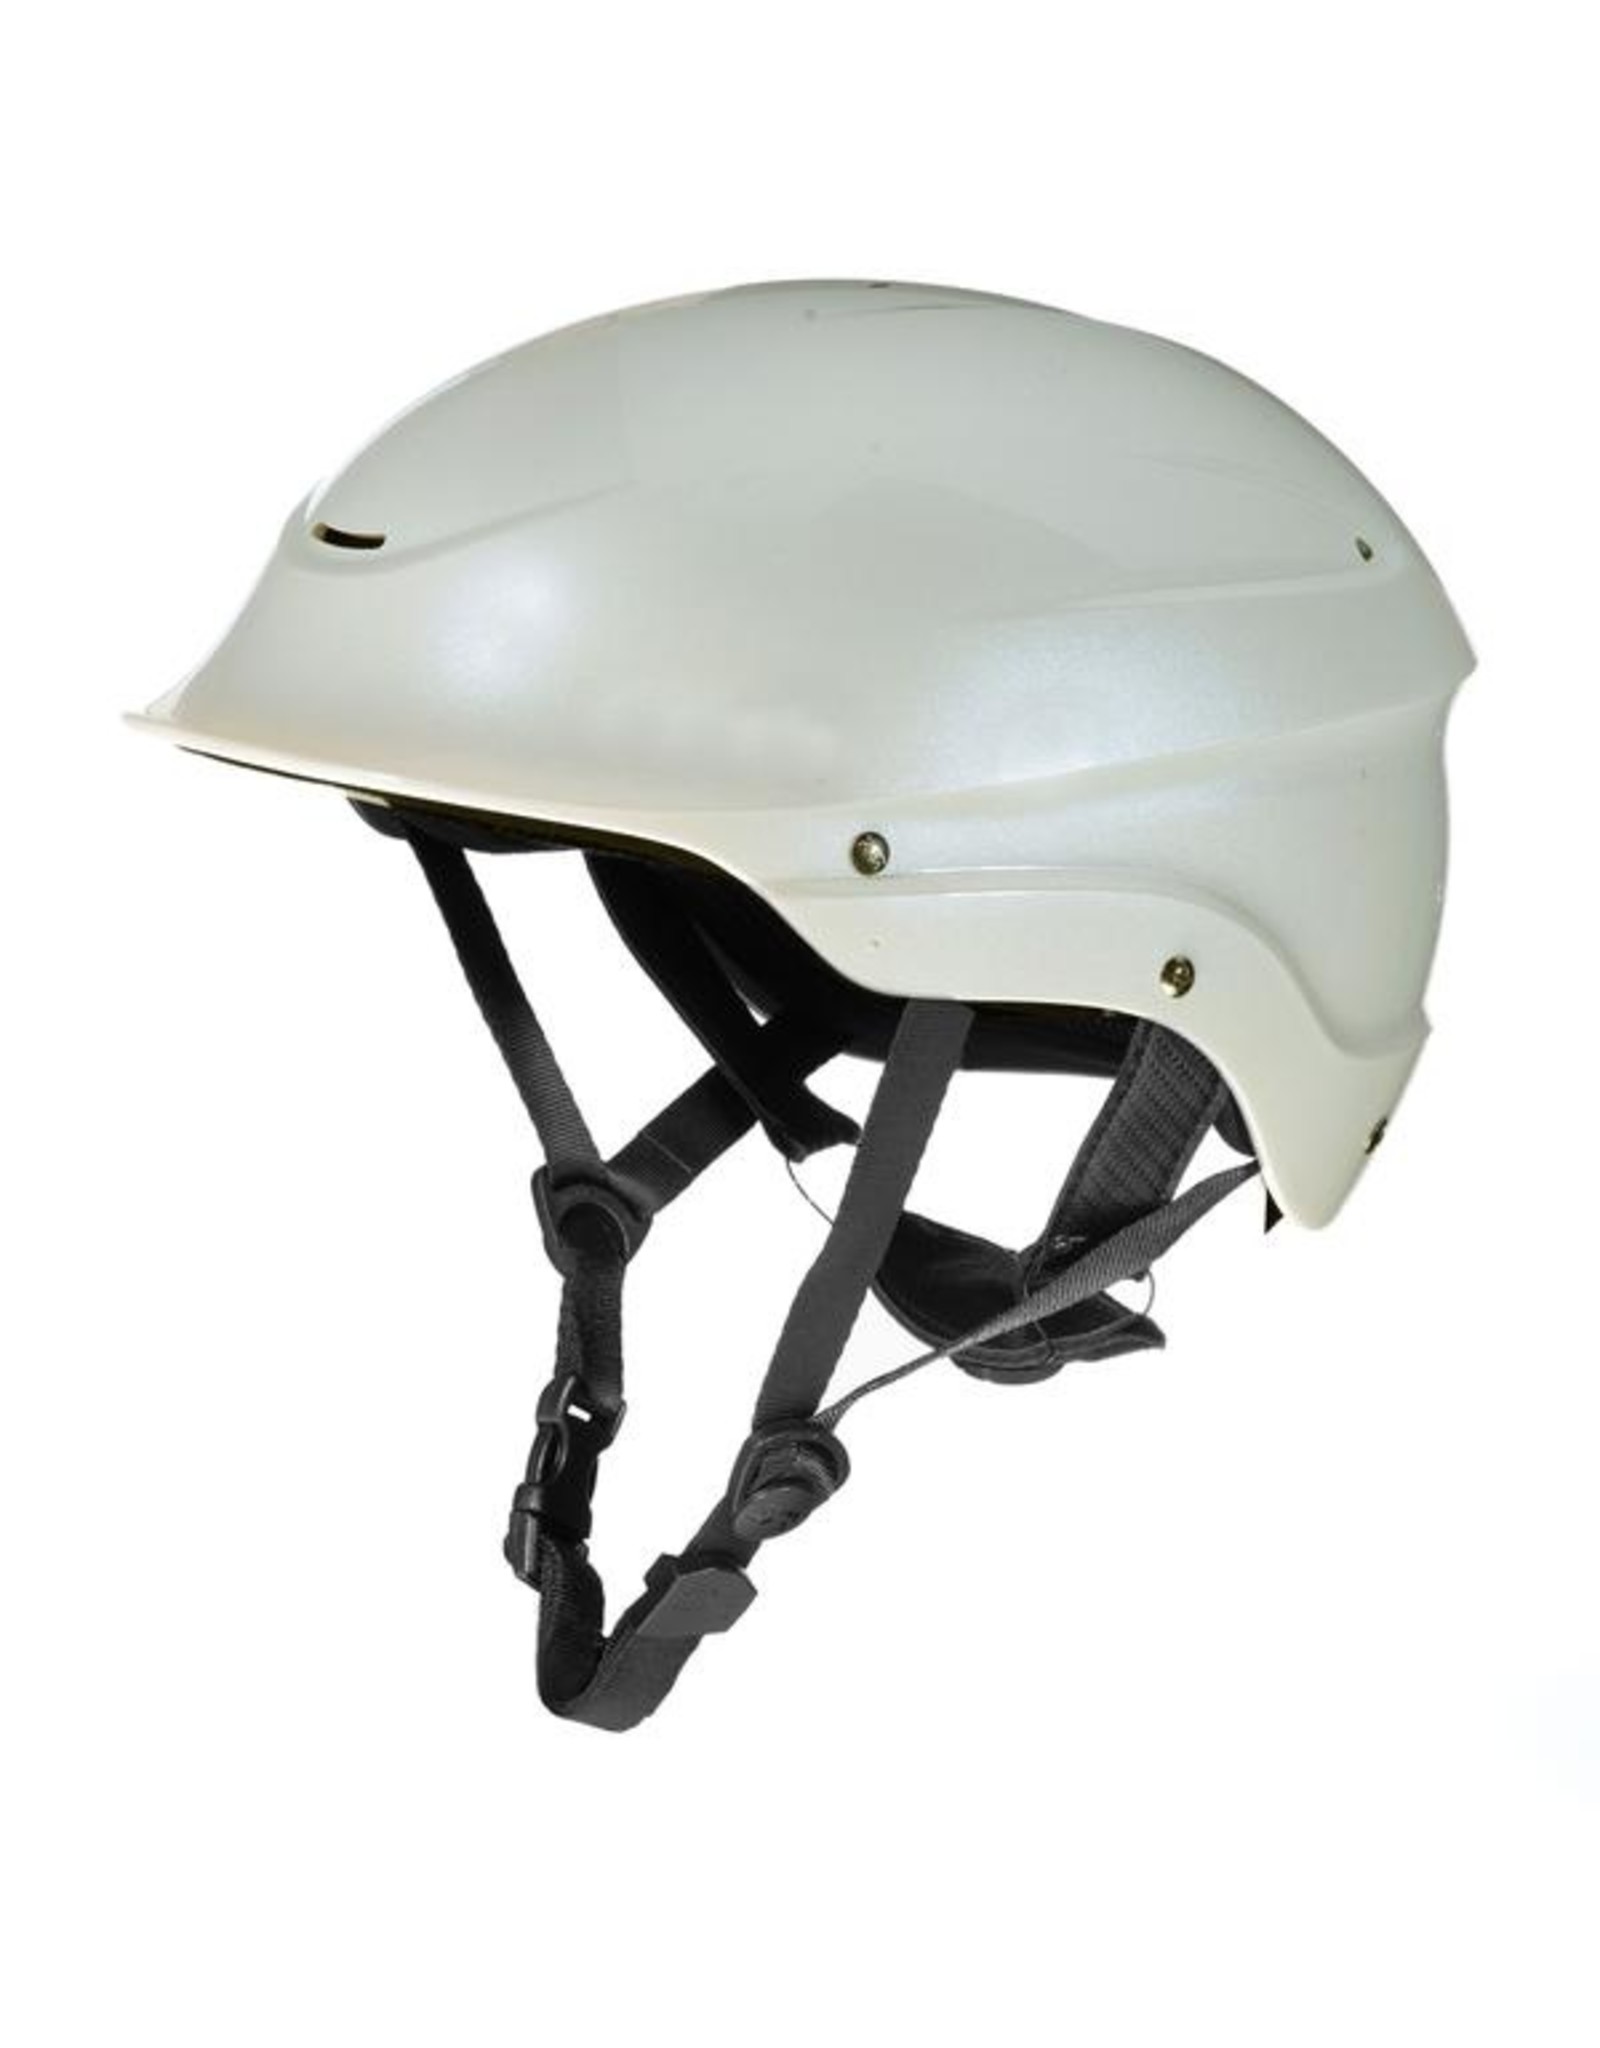 Shred Ready Shred Ready Standard Halfcut Helmet